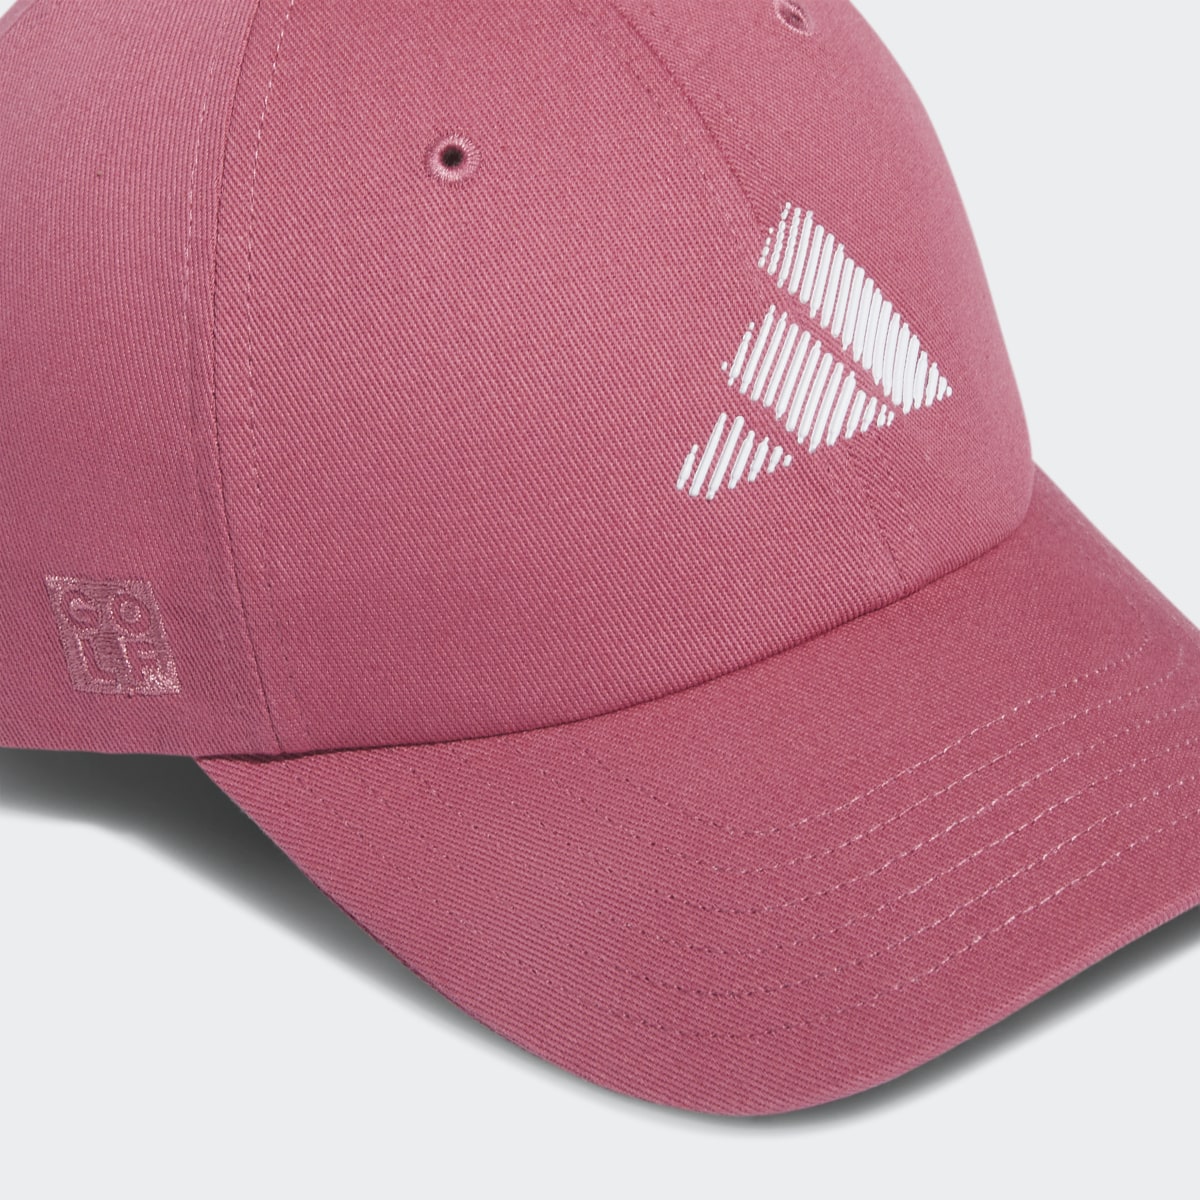 Adidas Criscross Golf Hat. 4